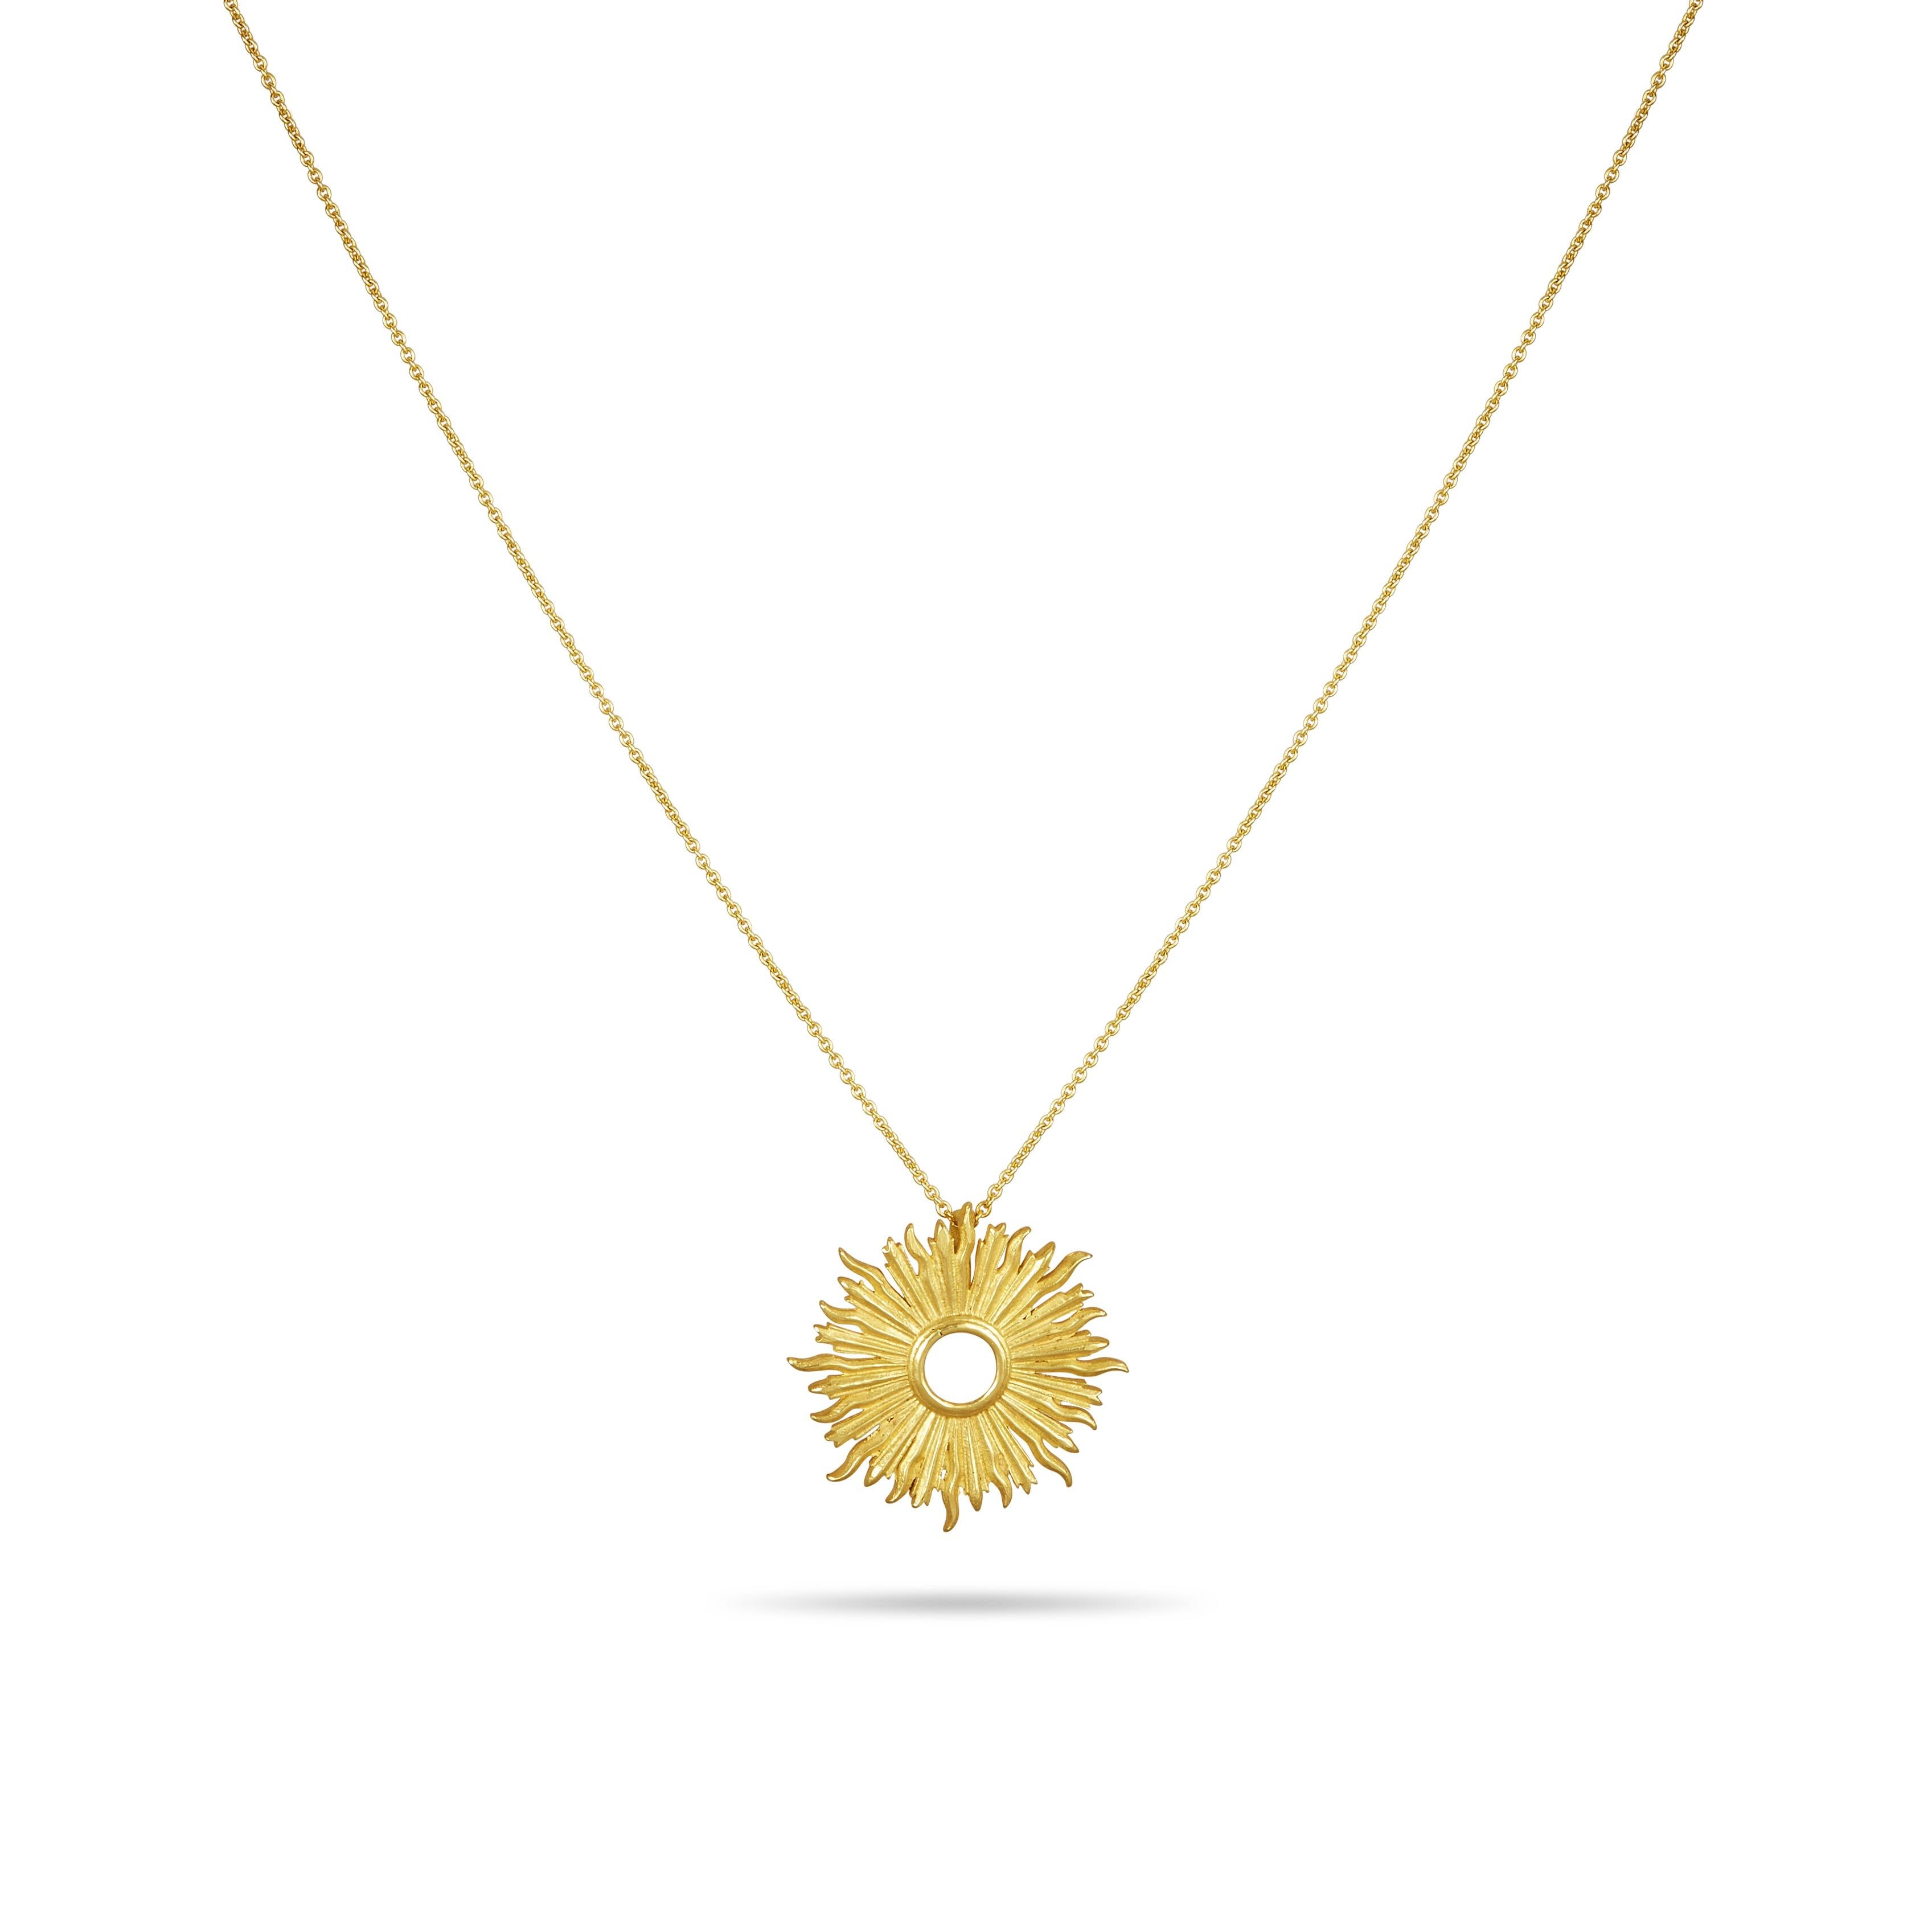 Women's 18 Karat Gold Handmade Sunburst Pendant Hanging on a 18 Karat Gold Chain For Sale